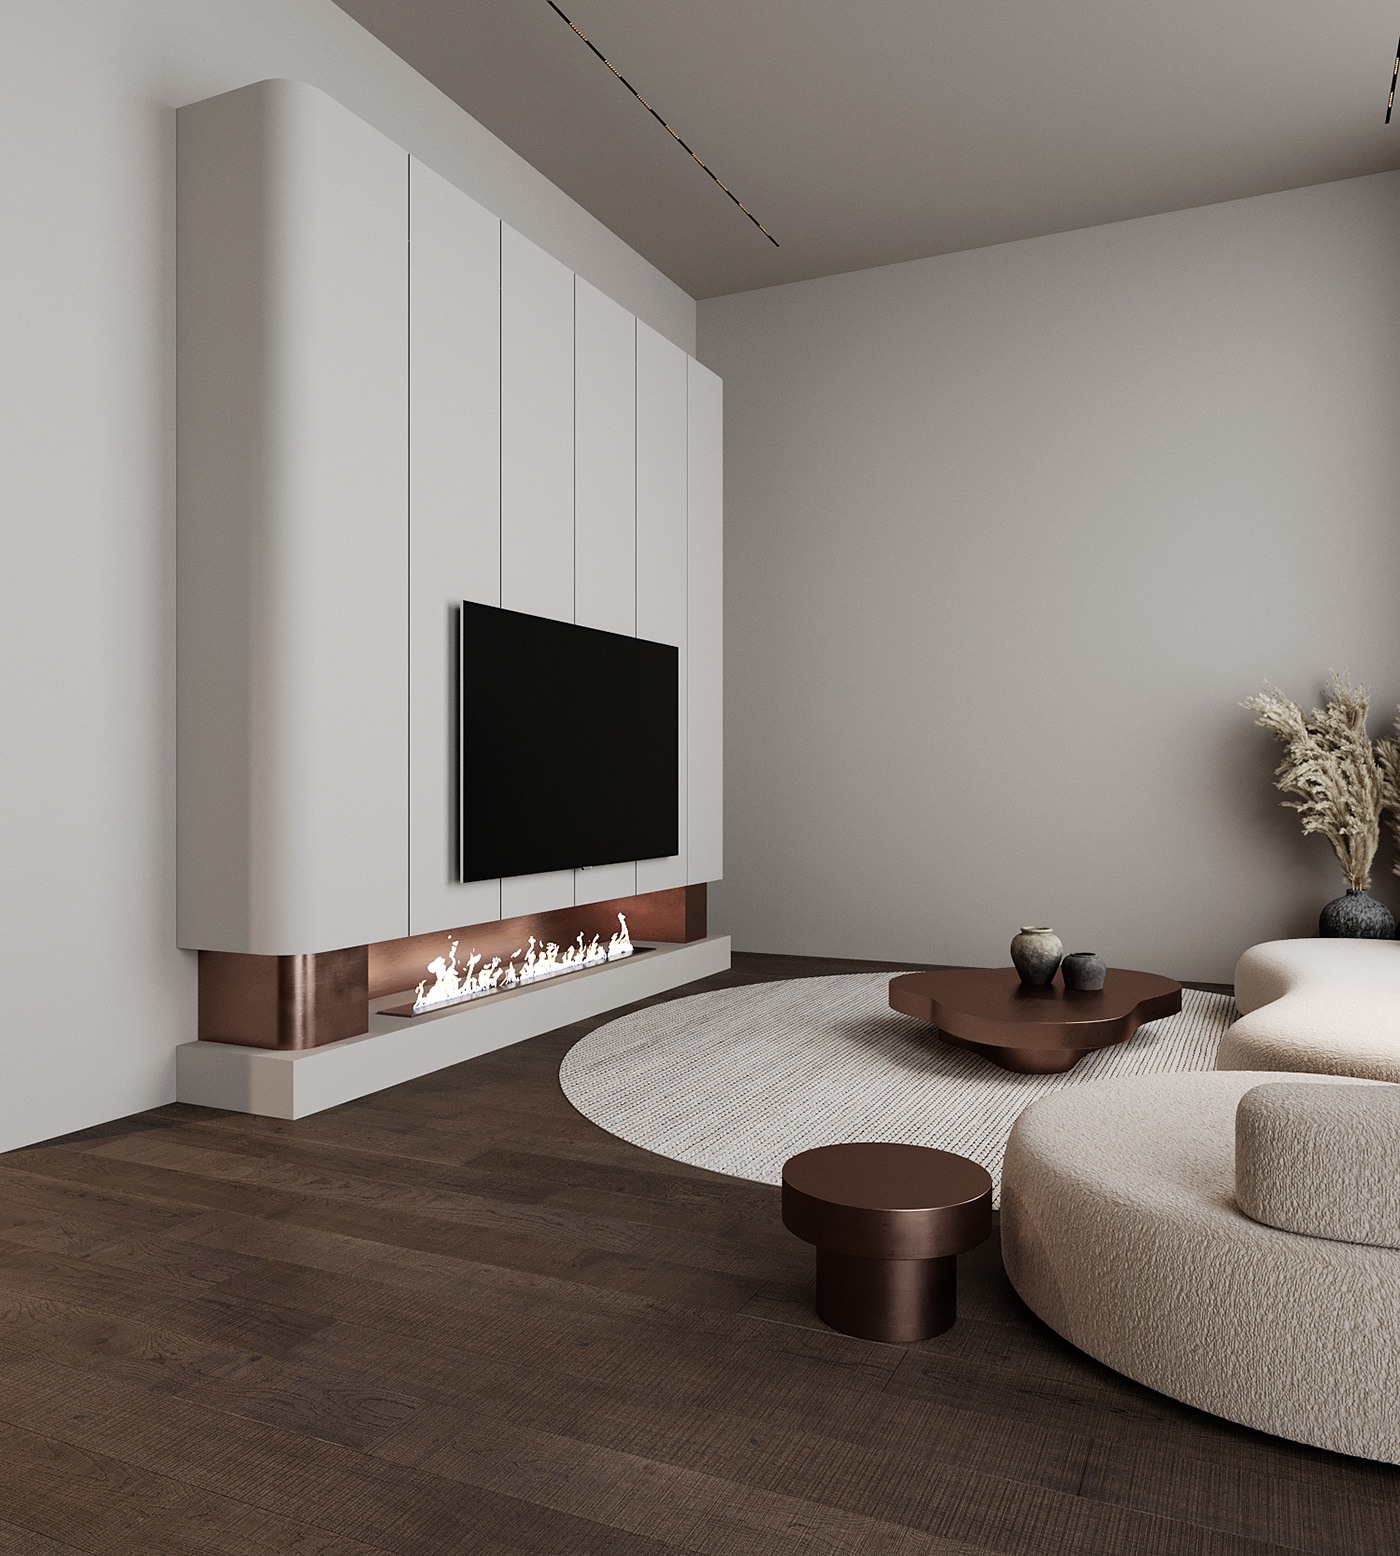 Interior interiordesign CGI visualization 3ds max rendering kitchen living room apartment